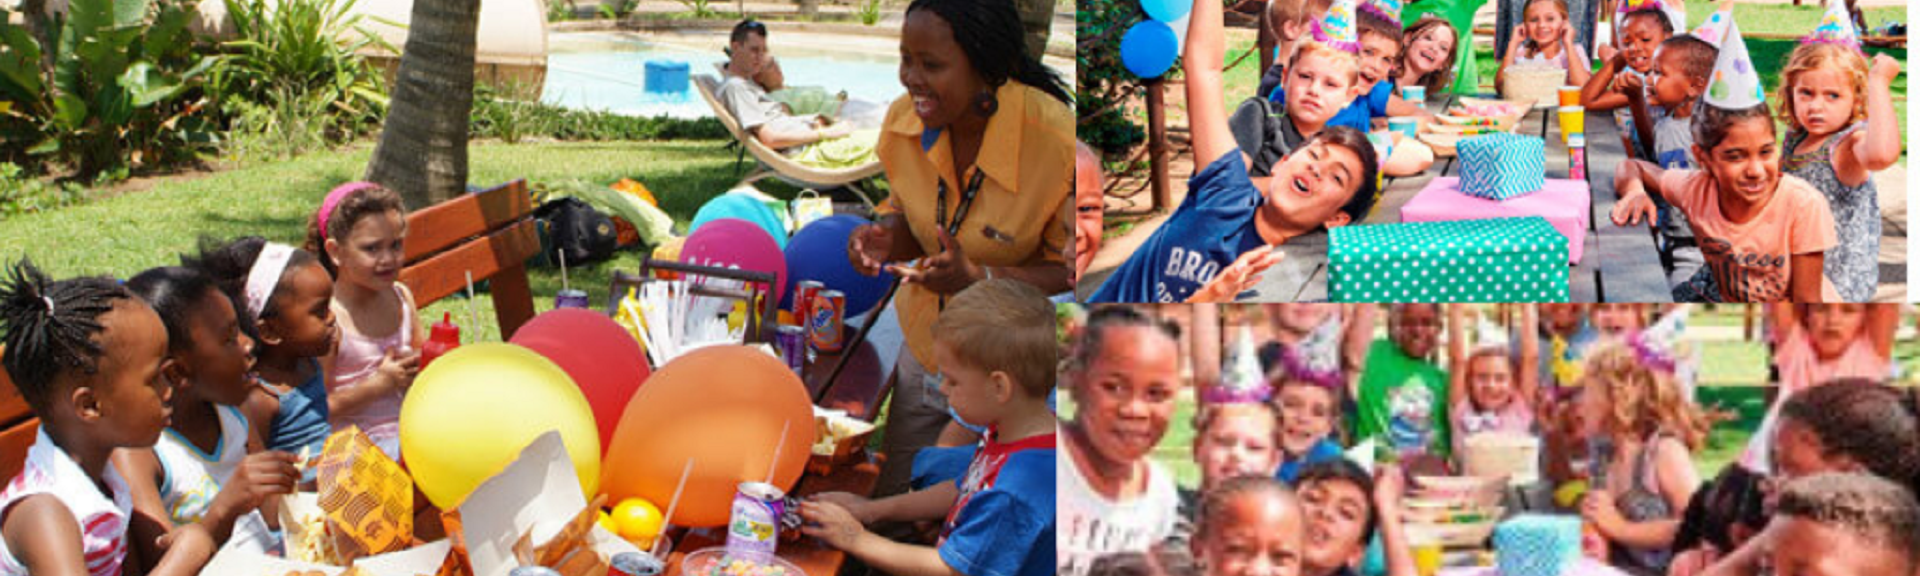 Ushaka Kids World | Durban | Kids Party Venue